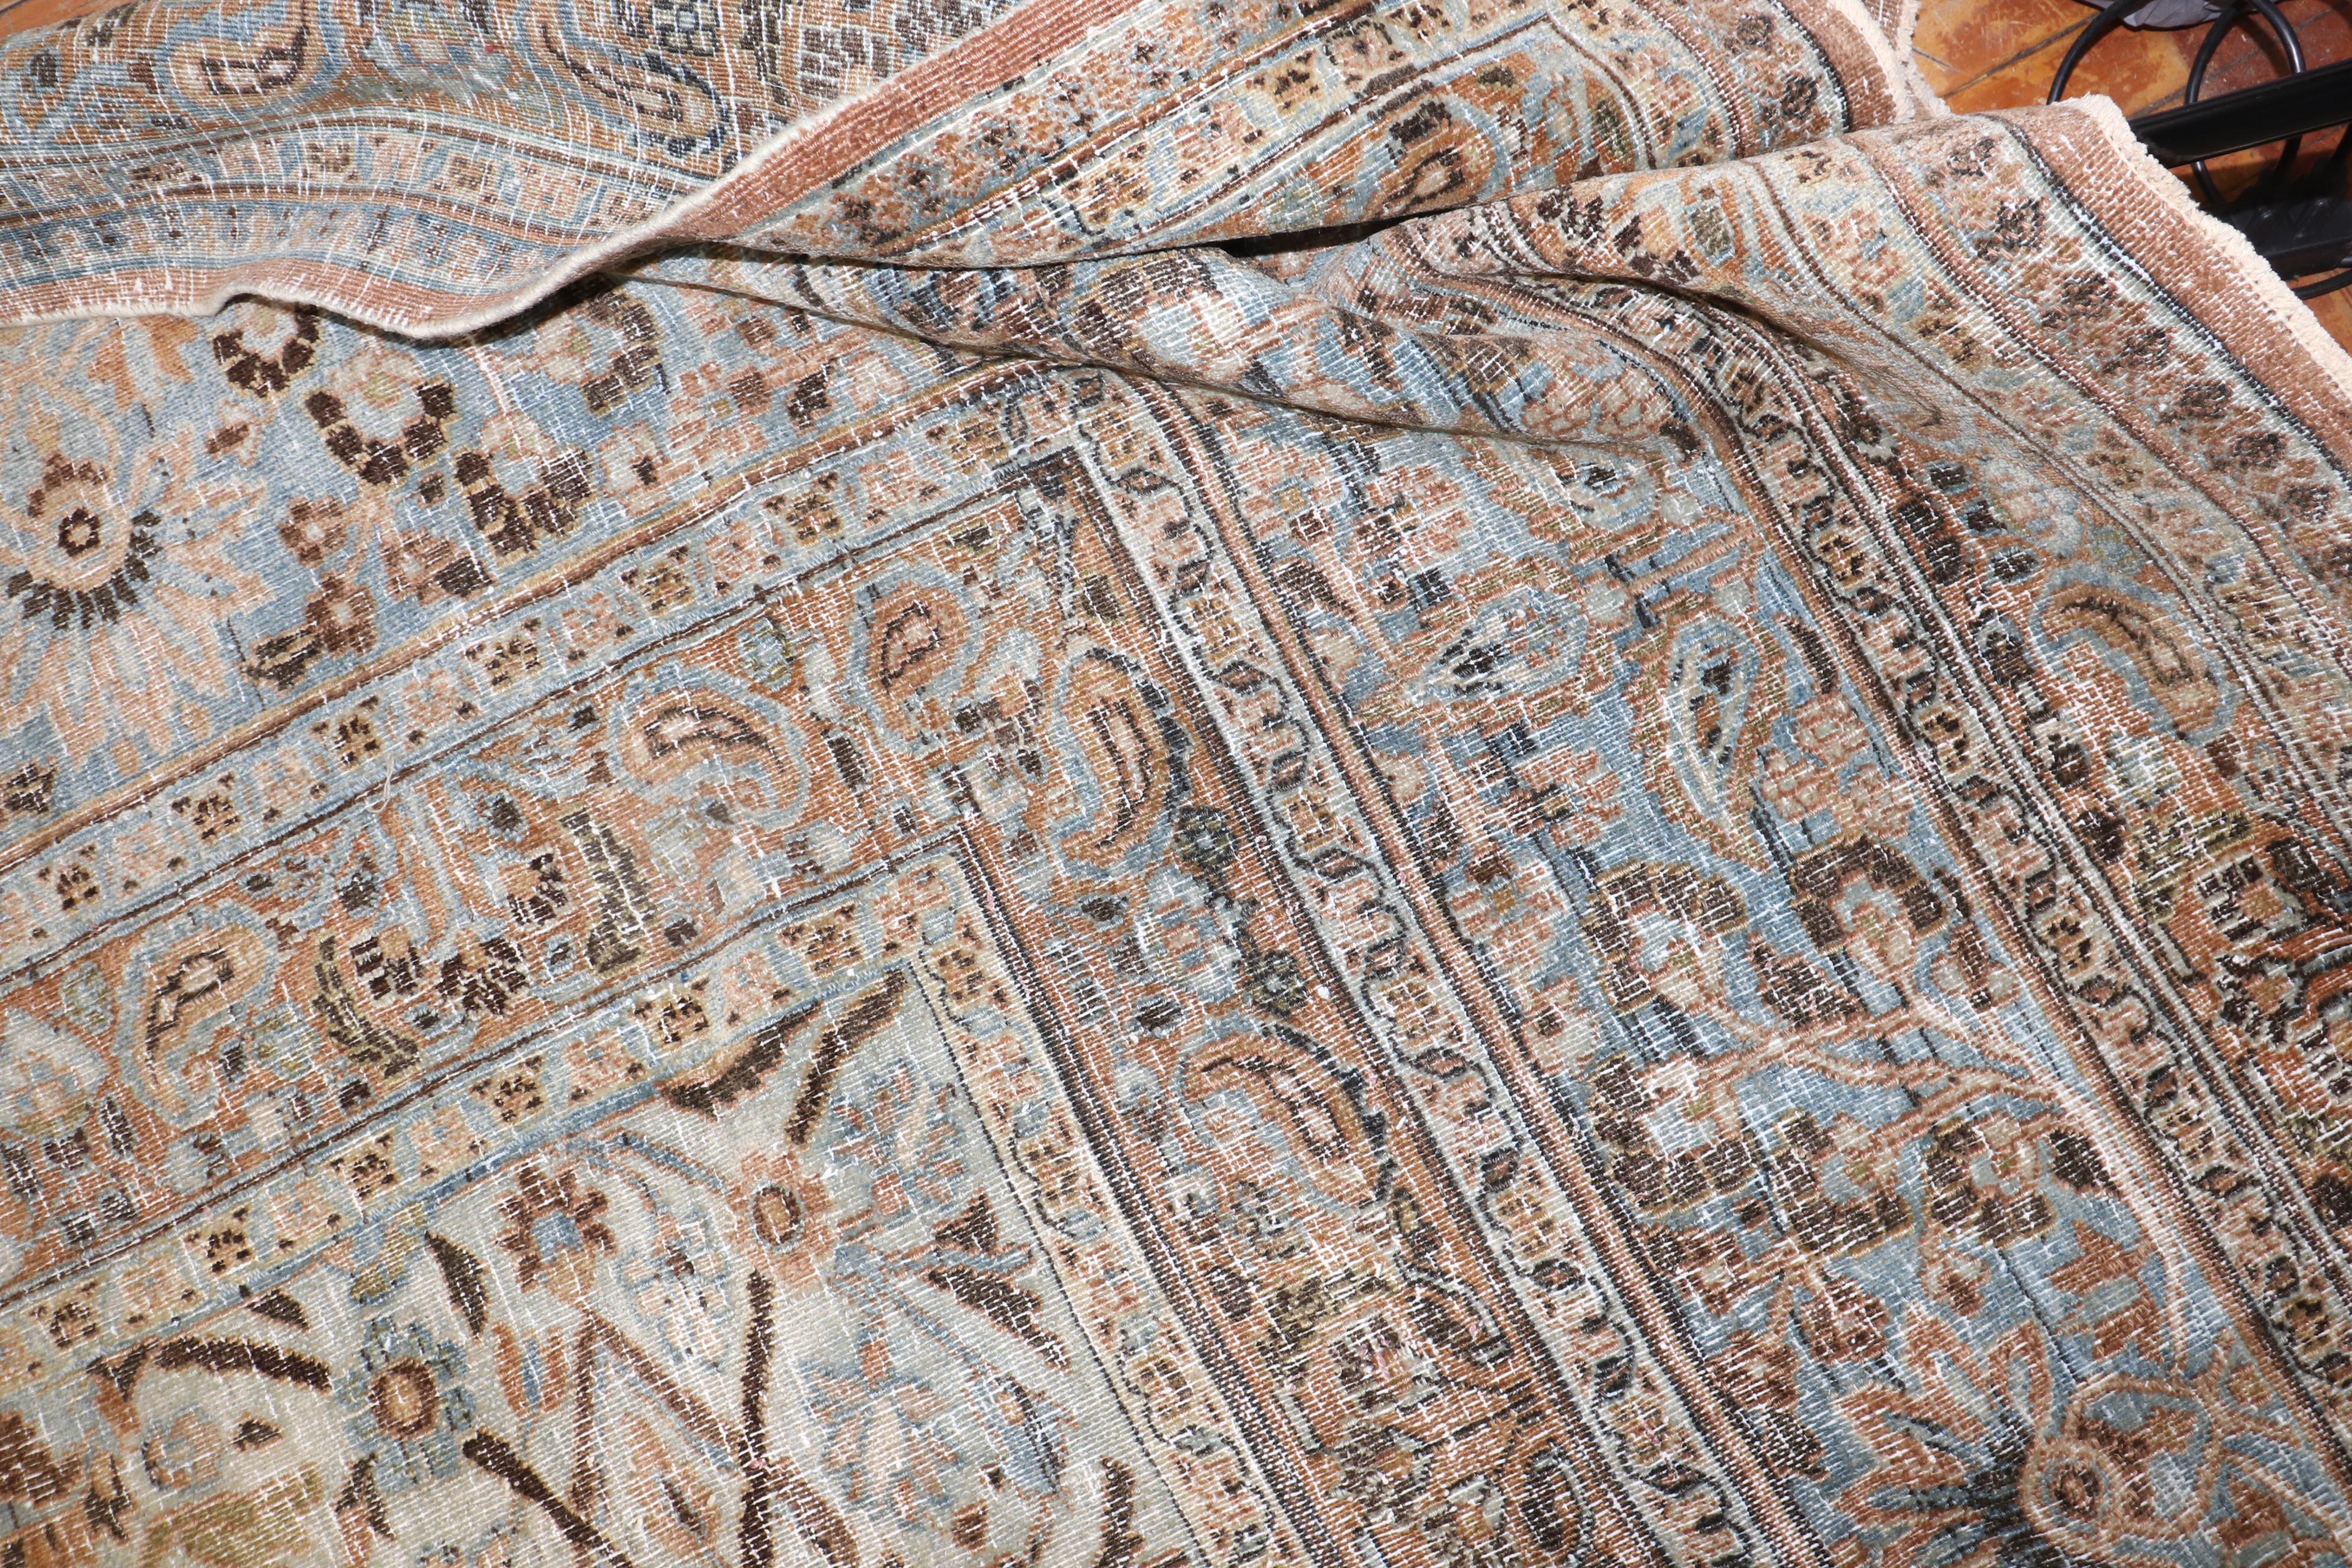 Zabihi Collection Antique Worn Persian Oversize Carpet For Sale 7